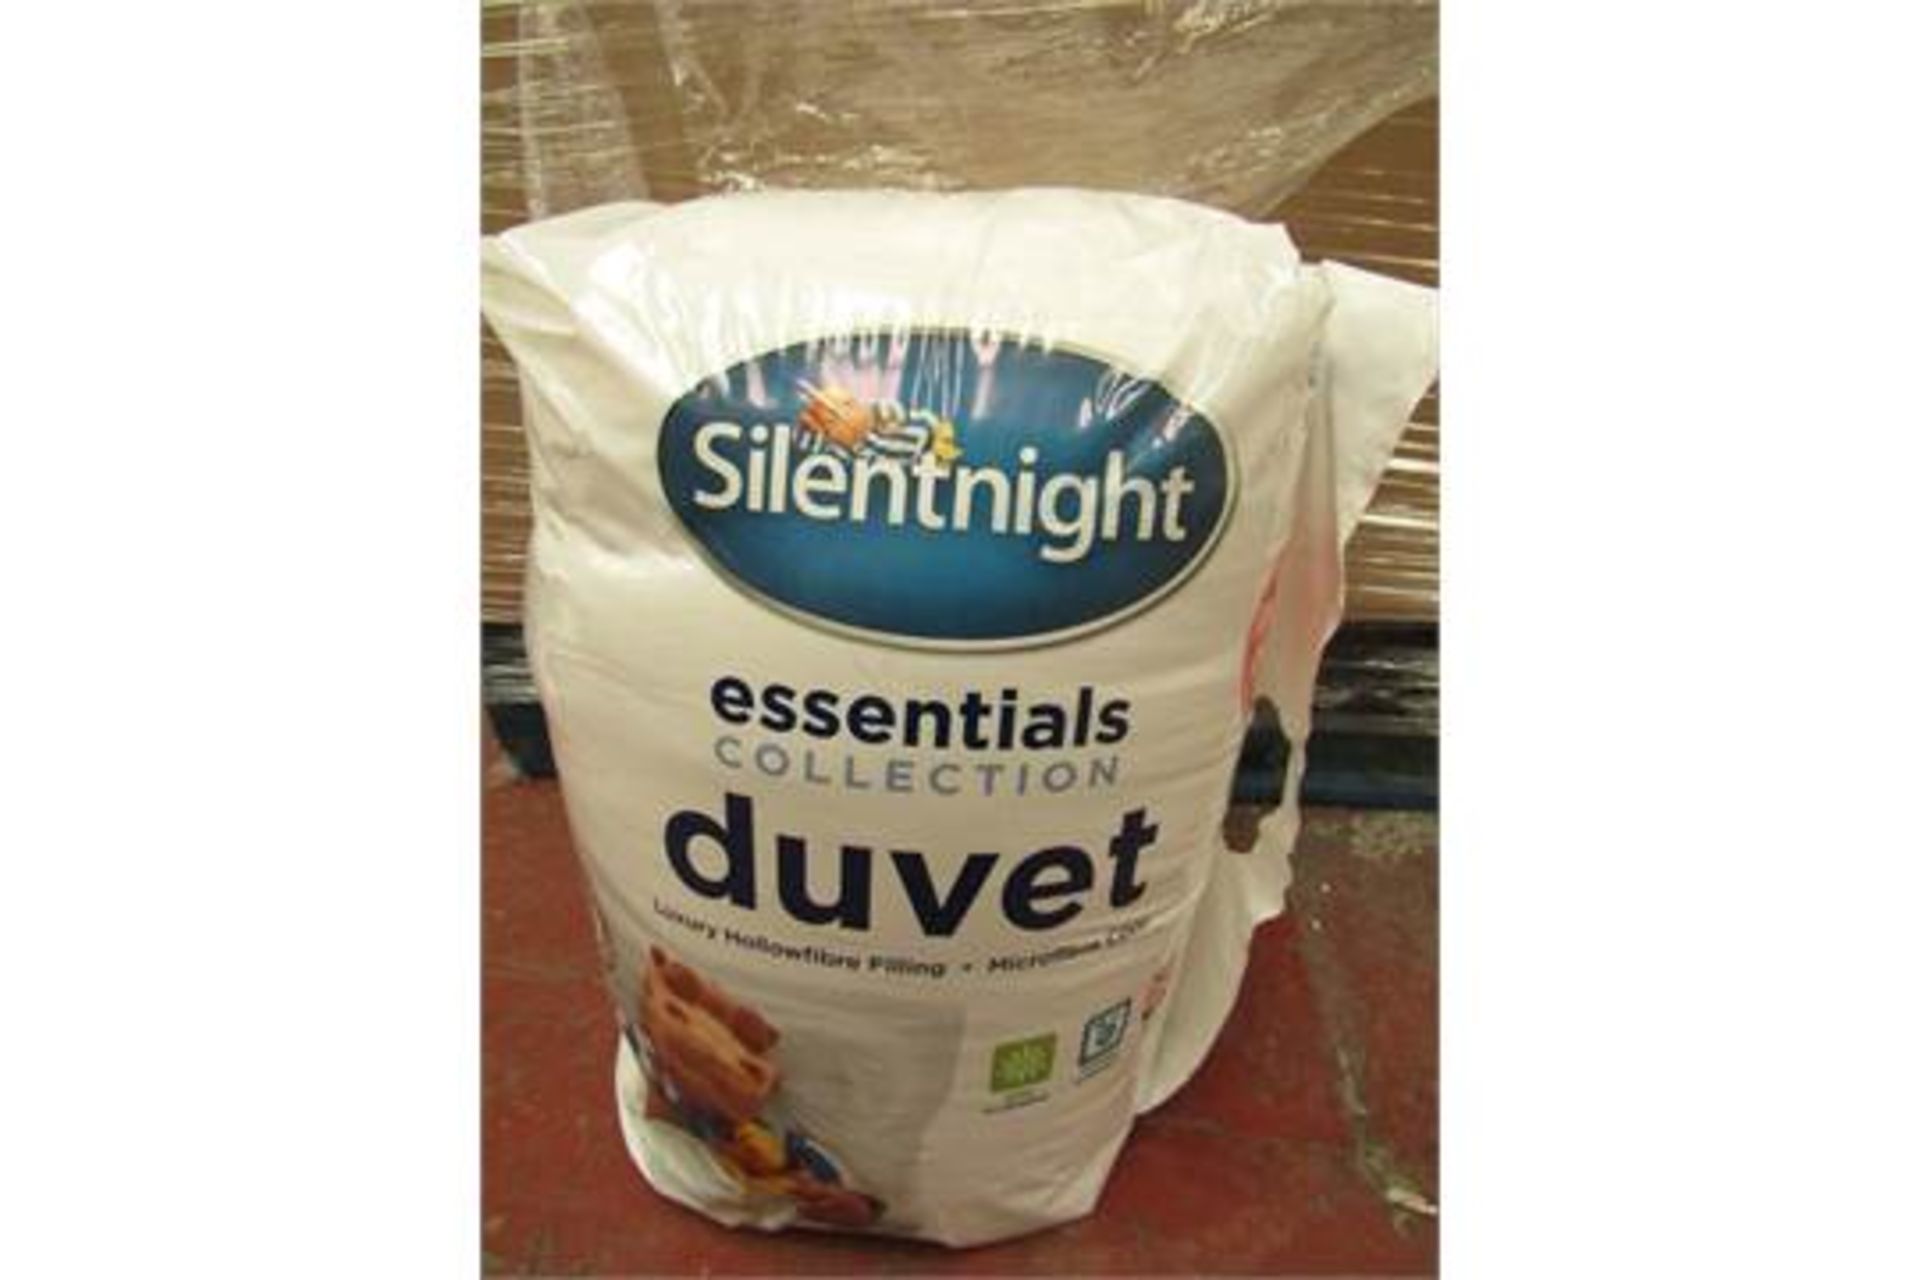 1x Silentnight essentials duvet, 10.5 Tog king size, new in packaging.